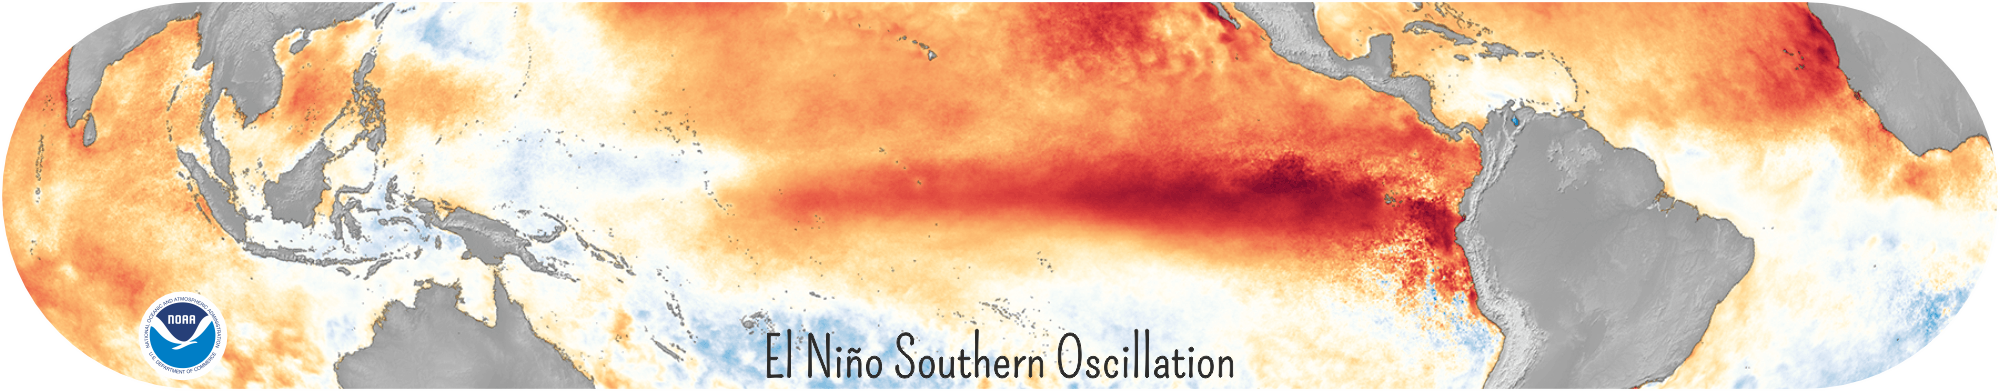 El Niño Southern Oscillation (ENSO) source NOAA